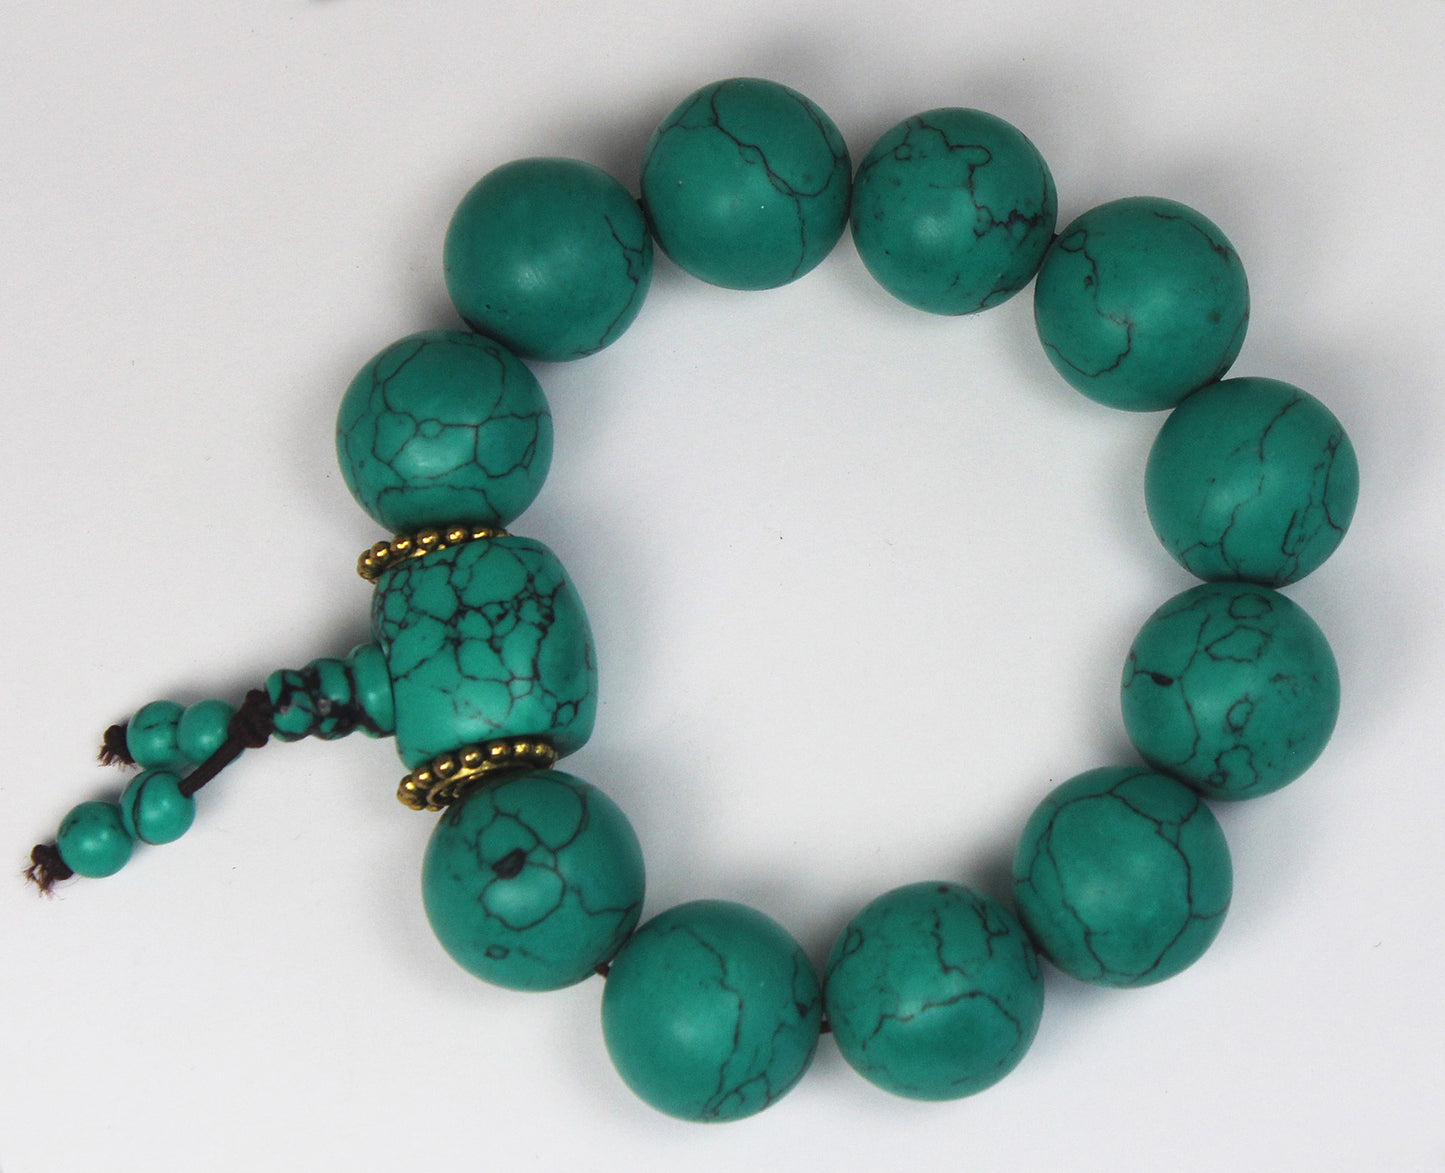 Blue Turquoise Beads bracelet 松石手串